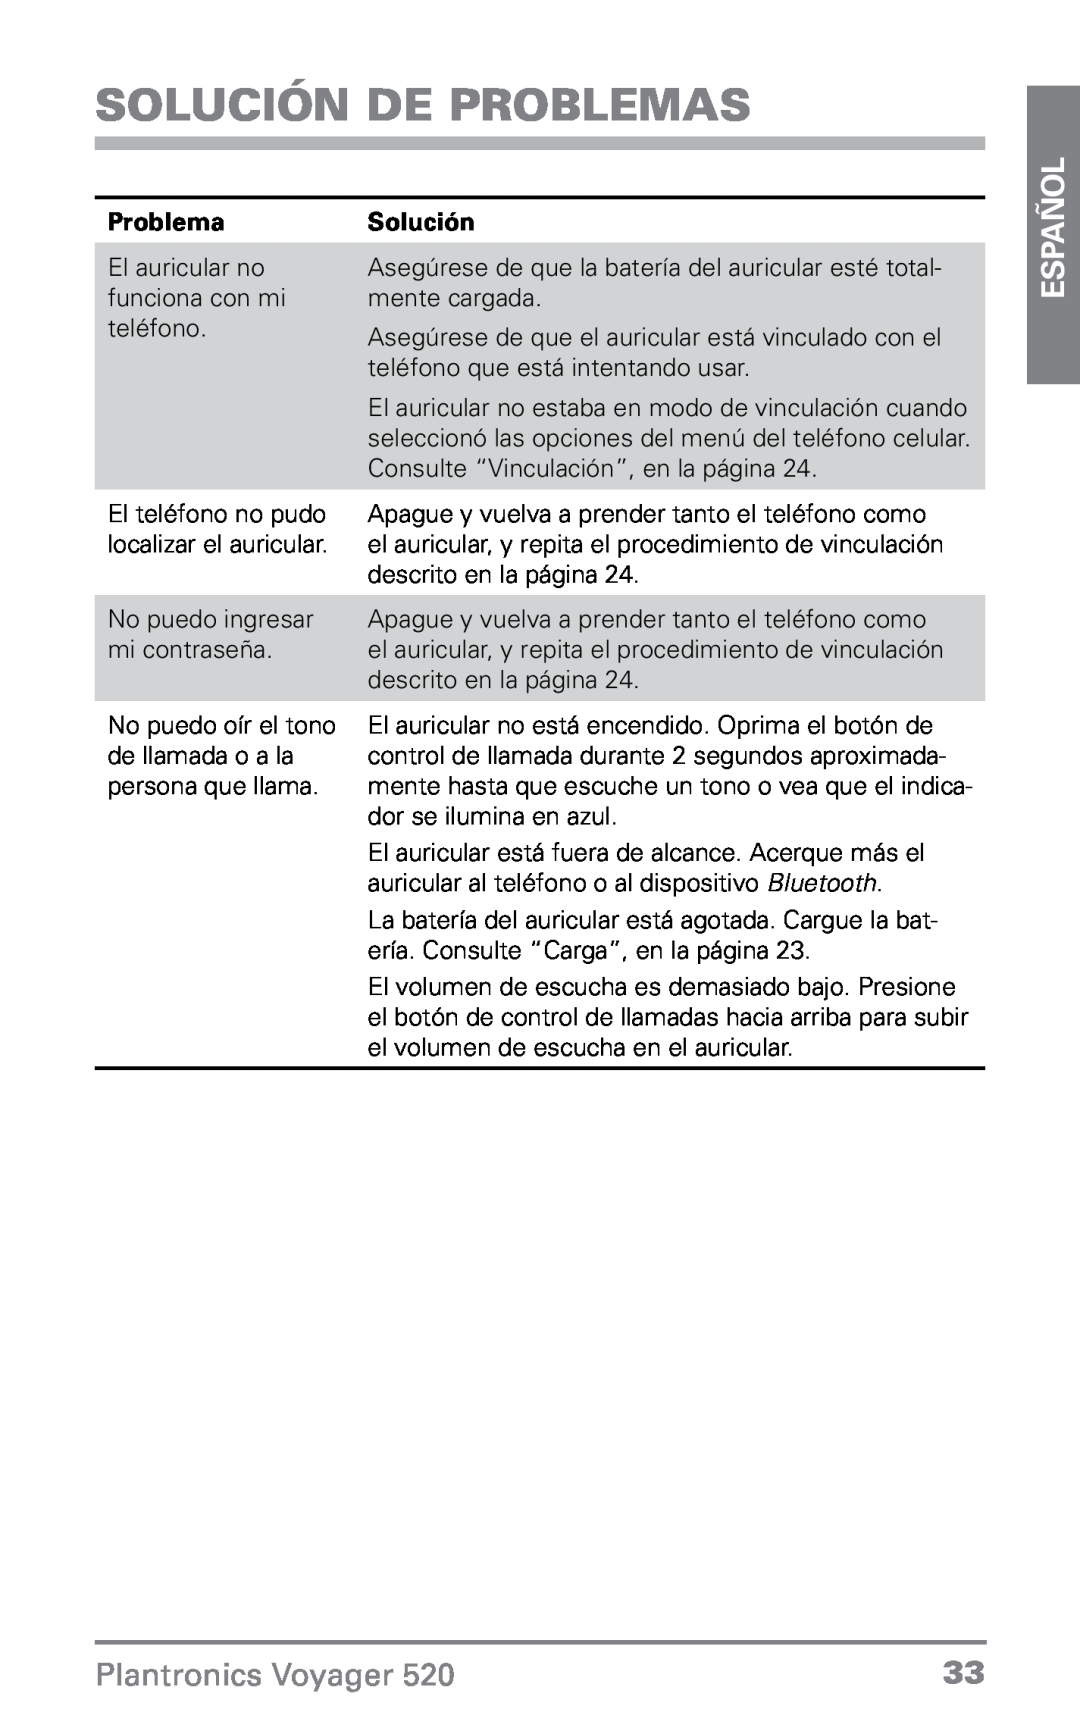 Plantronics 520 manual Solución de problemas, Problema, Español, Plantronics Voyager 